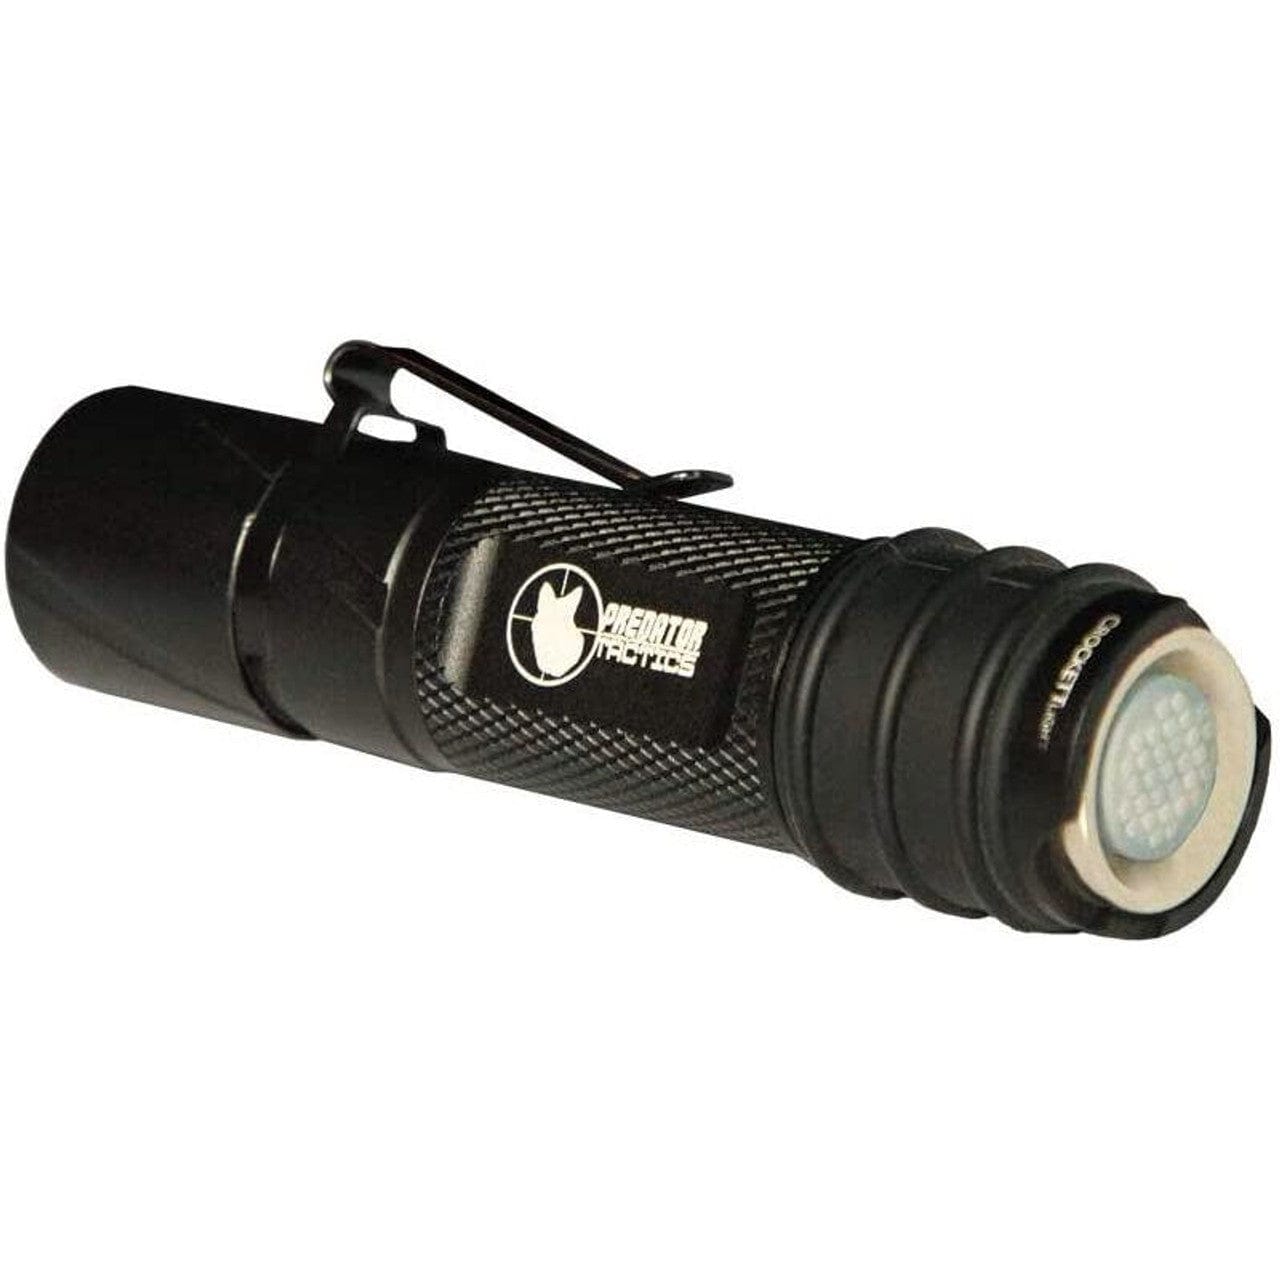 Predator Tac Crockett Light - Compact Hunting Flashlight - 156 Lumen 6700k / Bright White - Magnetic - Premium Lights from Predator Tactics - Just $22.50! Shop now at Prepared Bee